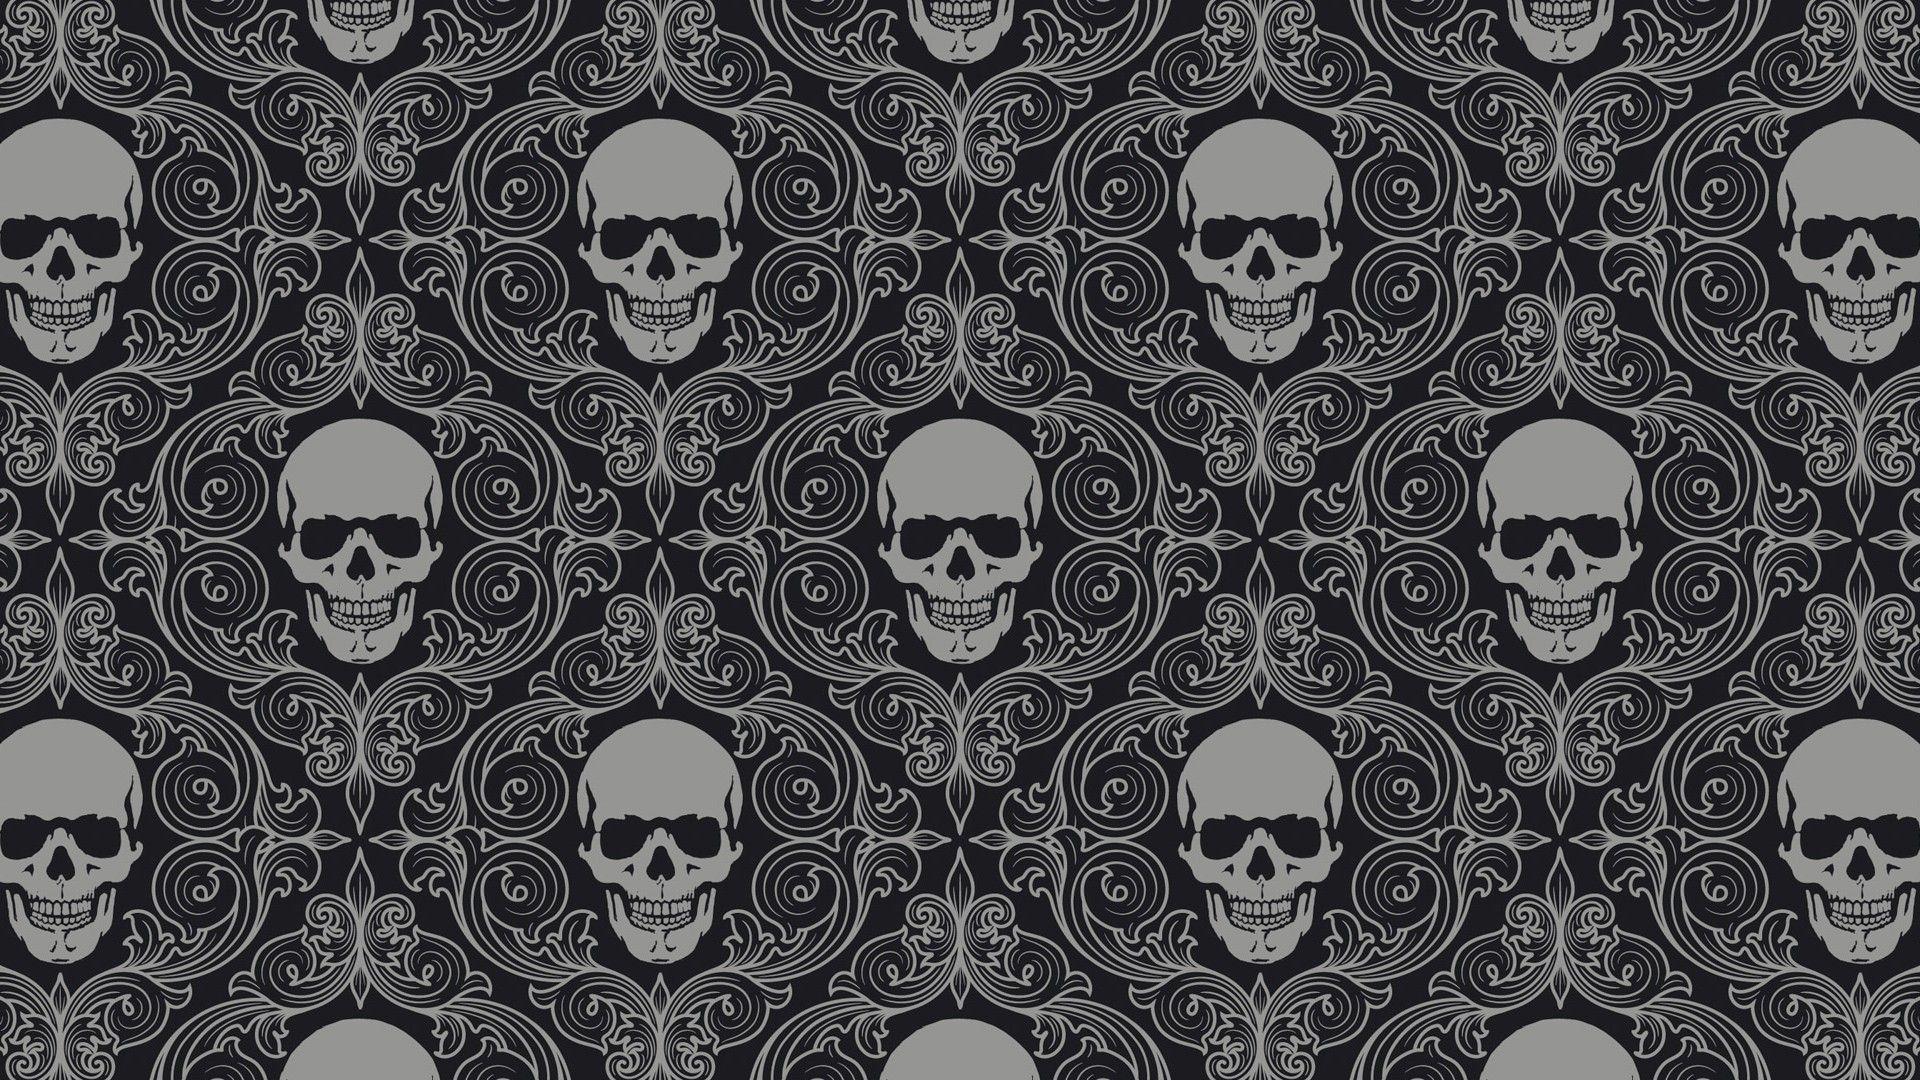 Skull Pattern Wallpaper 15489 1920x1080 px